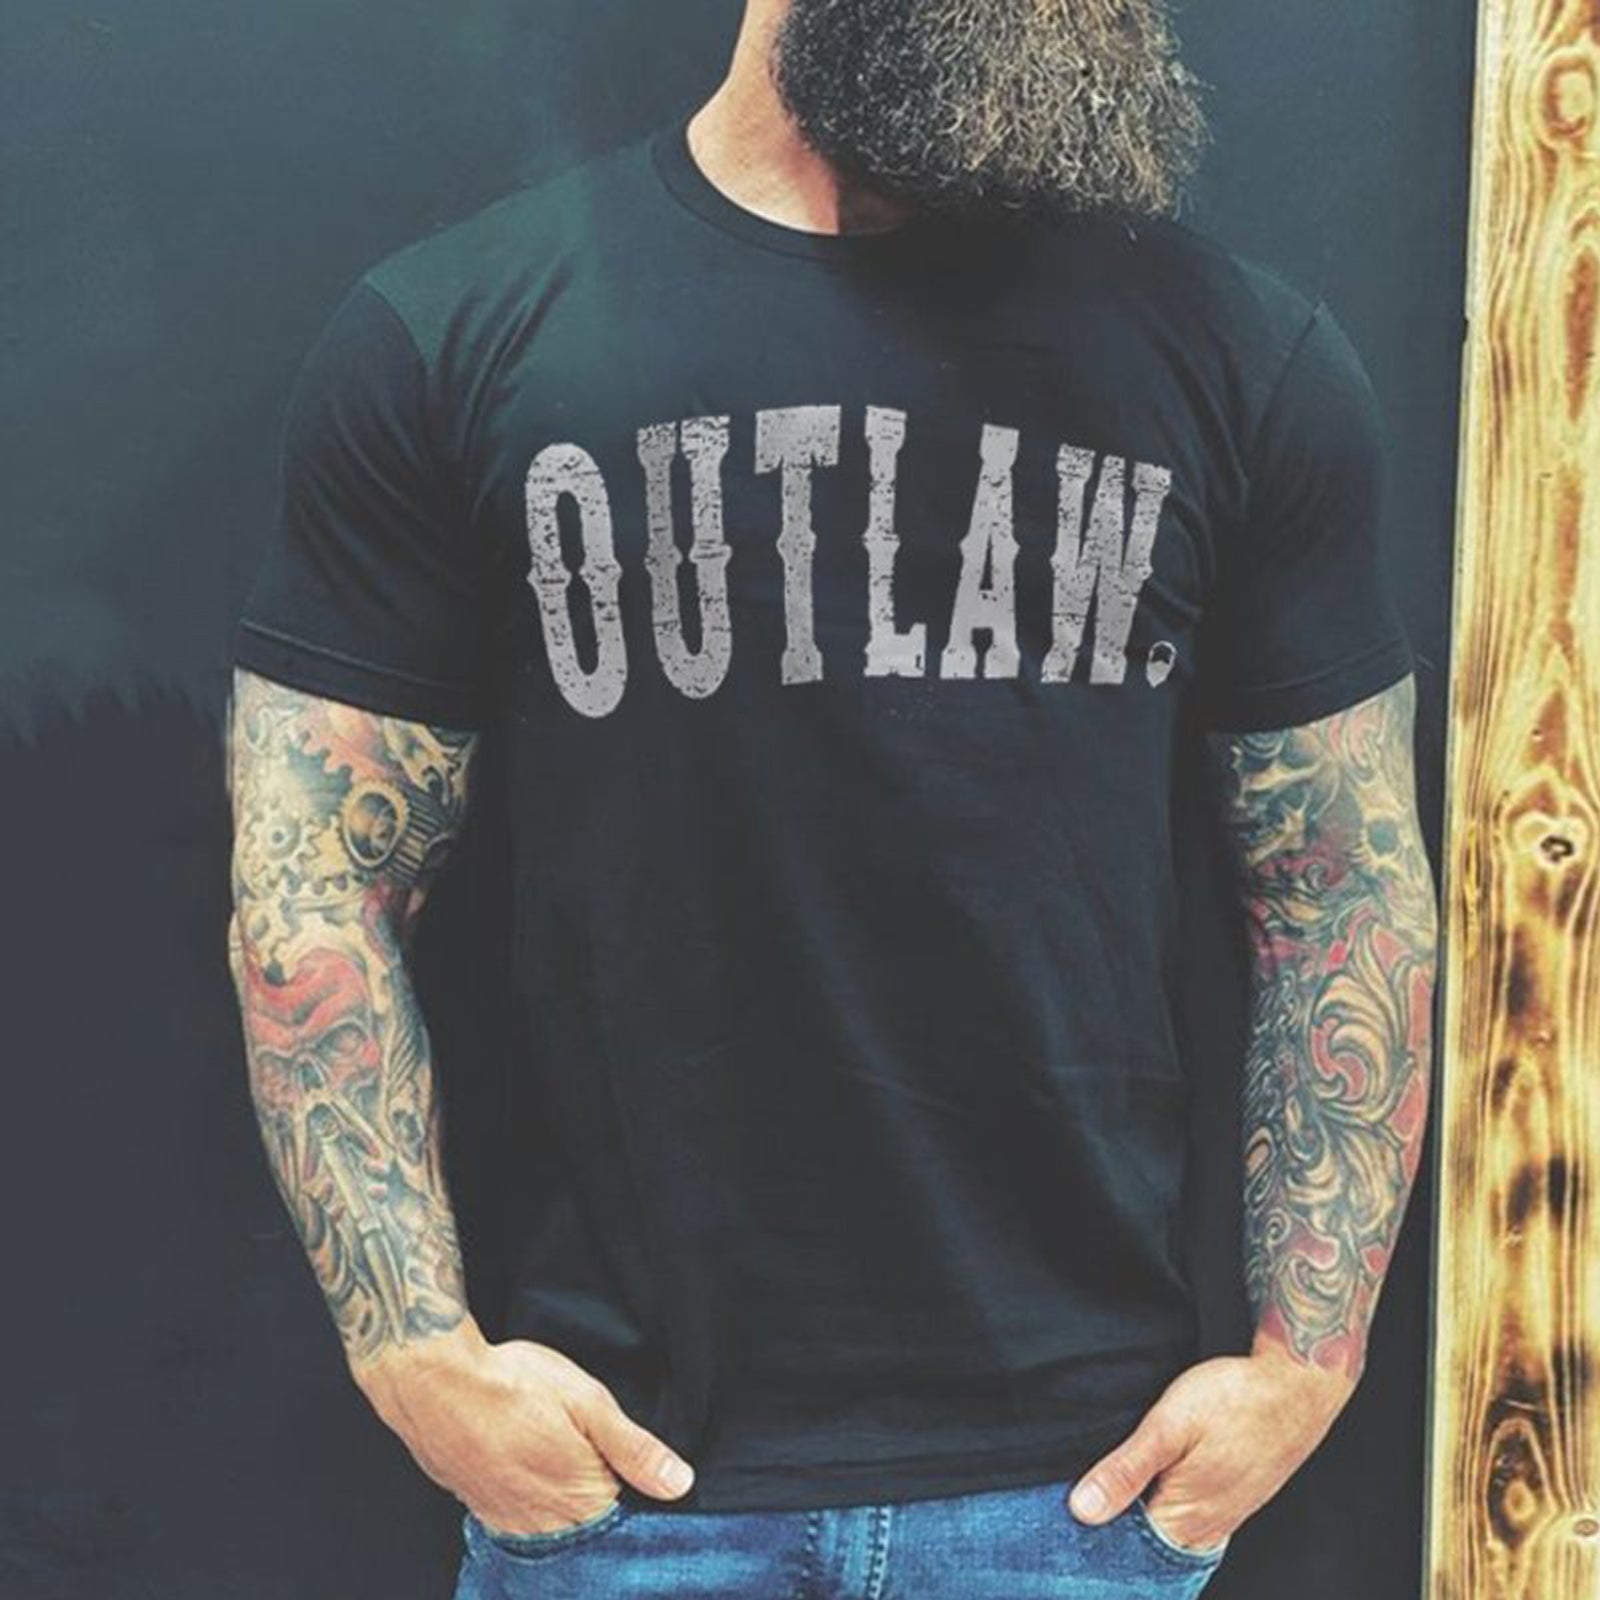 Livereid Black Men Outlaw Letter Printed Designer Black T-Shirt - chicyea